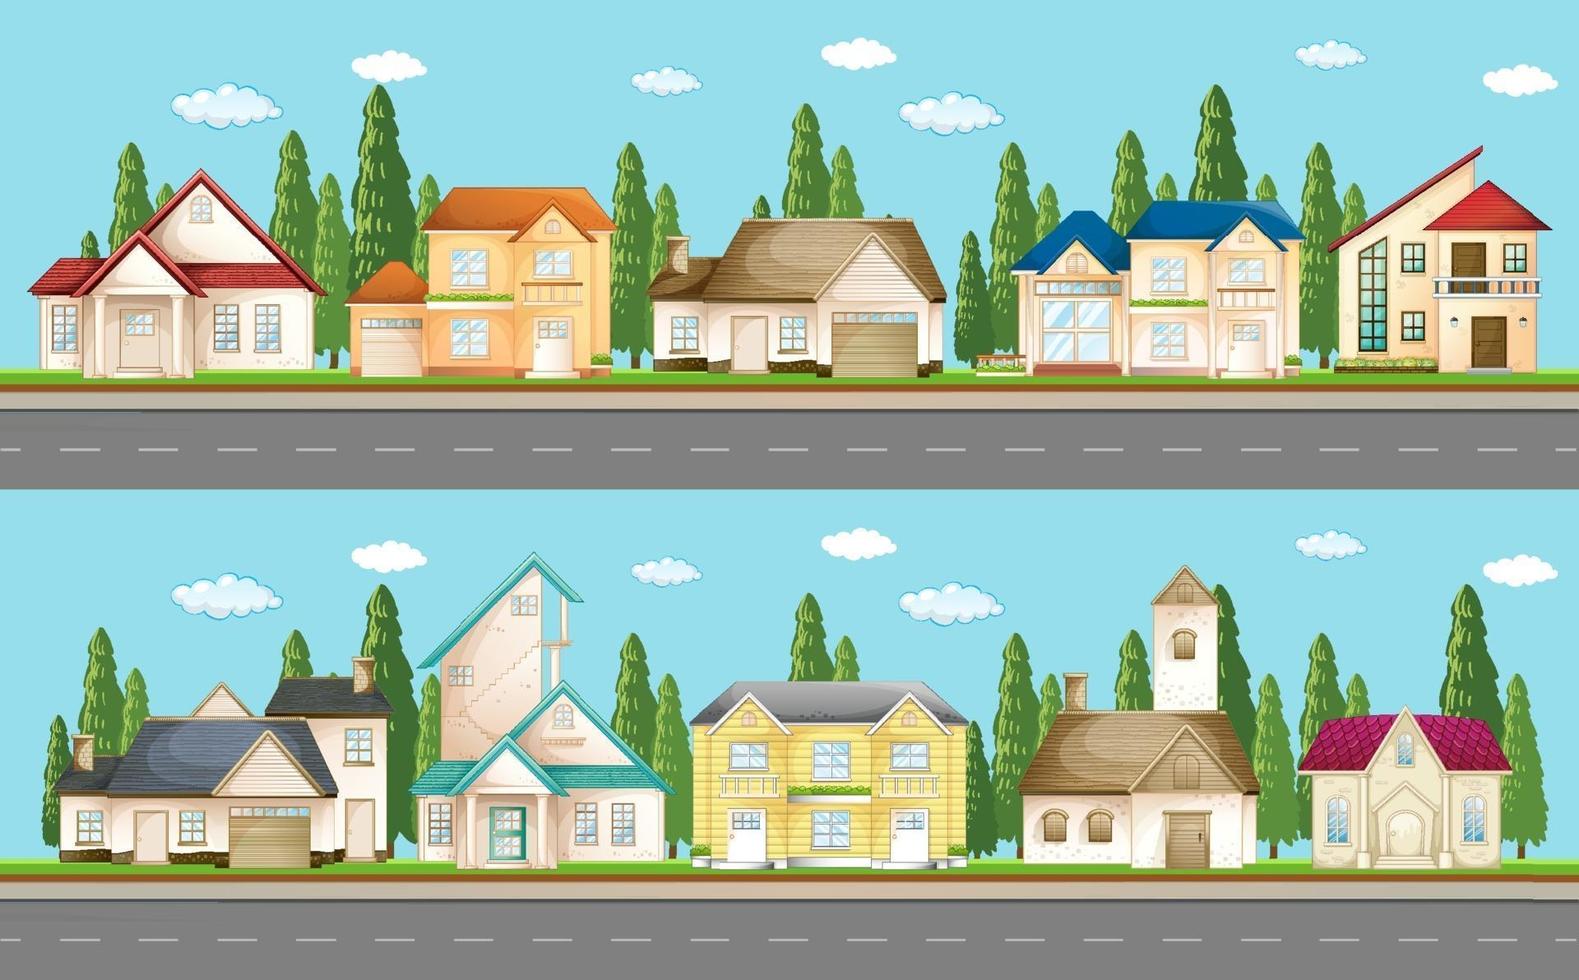 Set of urban houses along the street vector